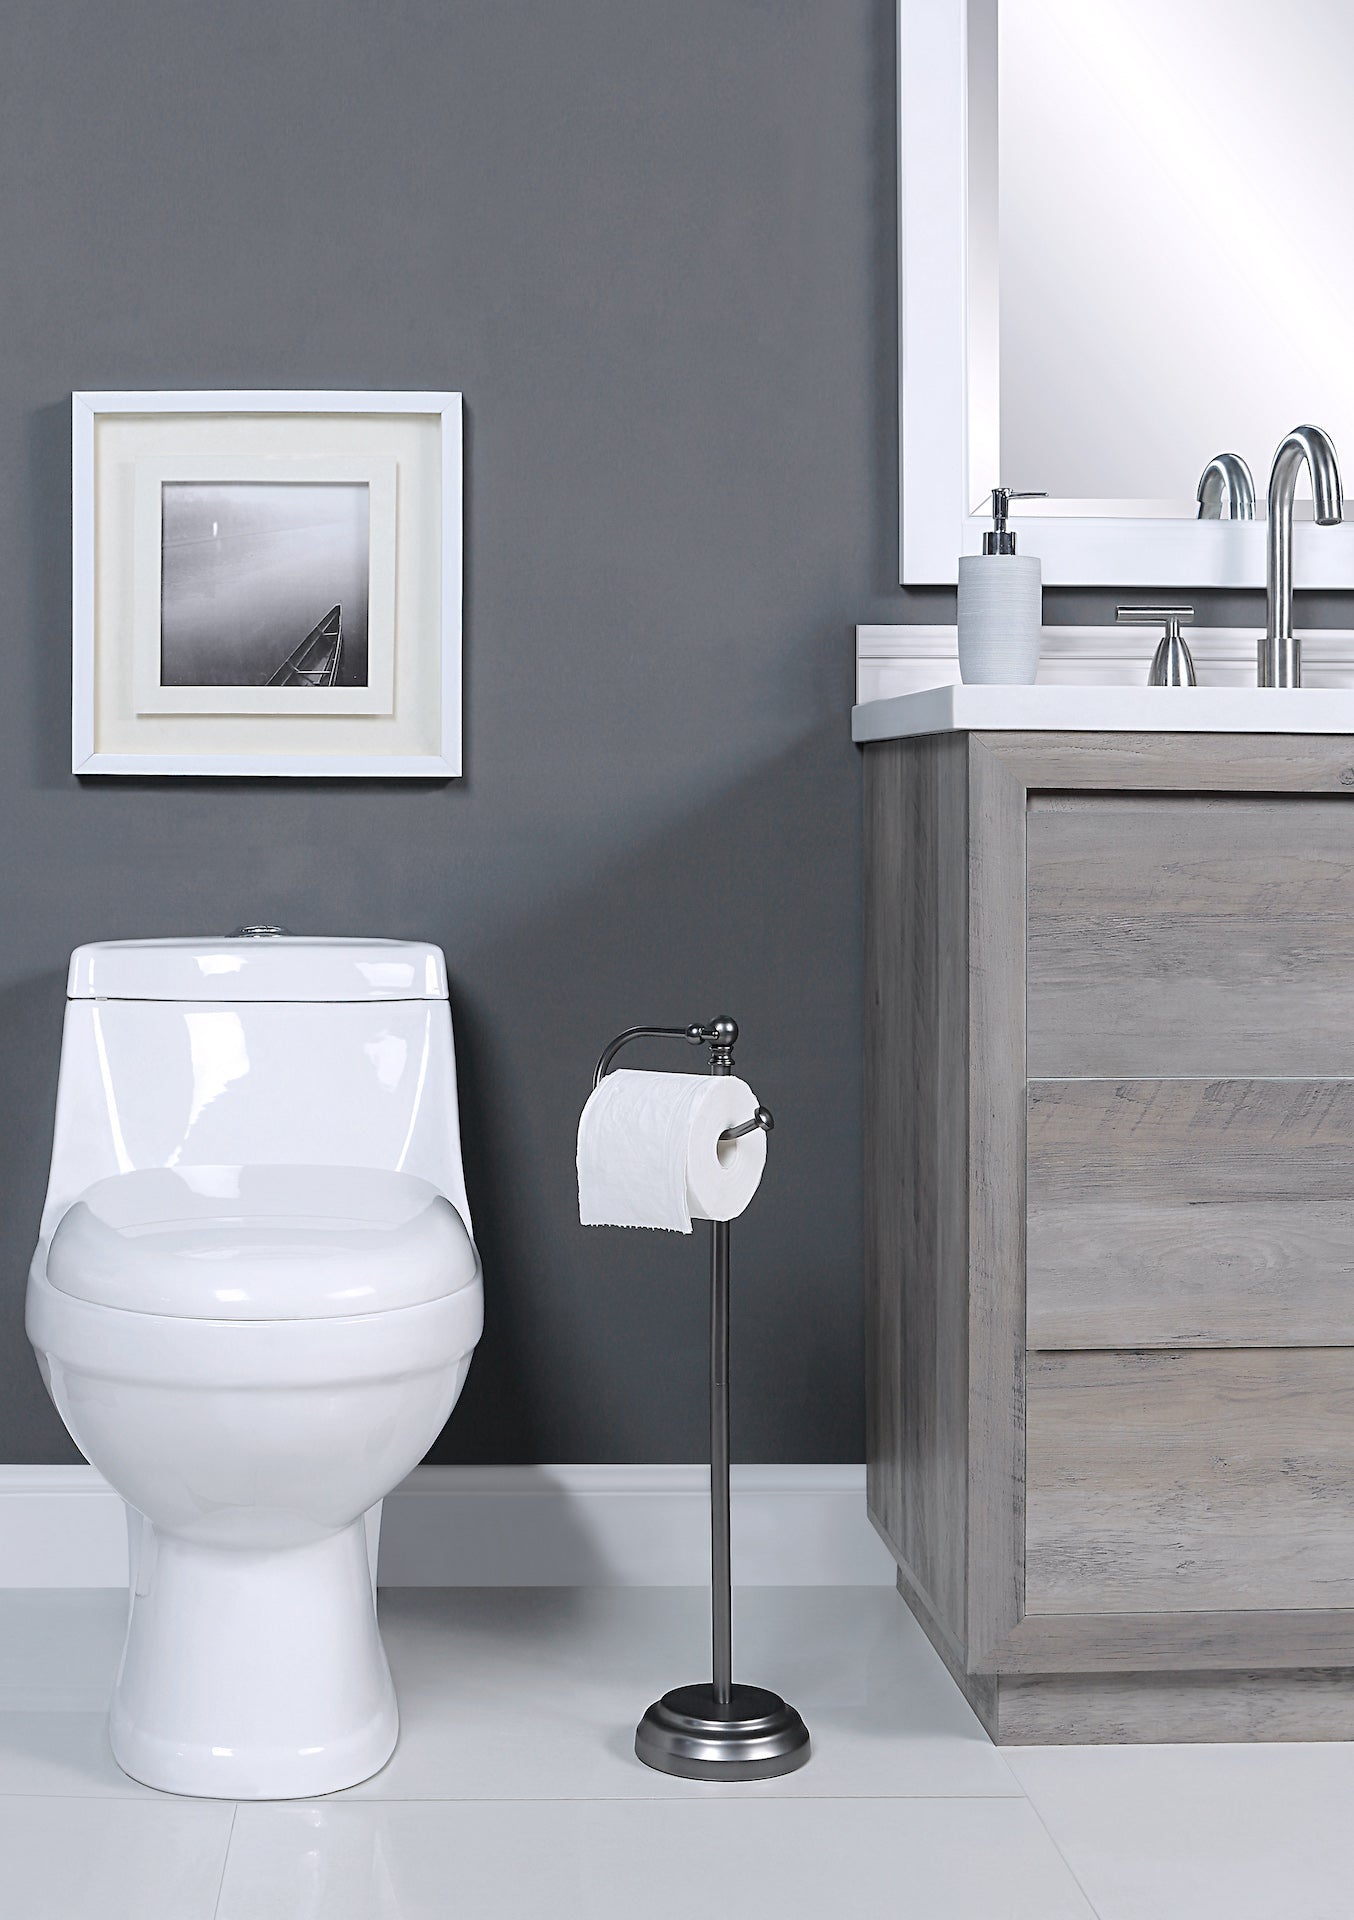 SunnyPoint  Bathroom Toilet Tissue Paper Roll Storage Holder Stand –  LCUS-SunnyPoint